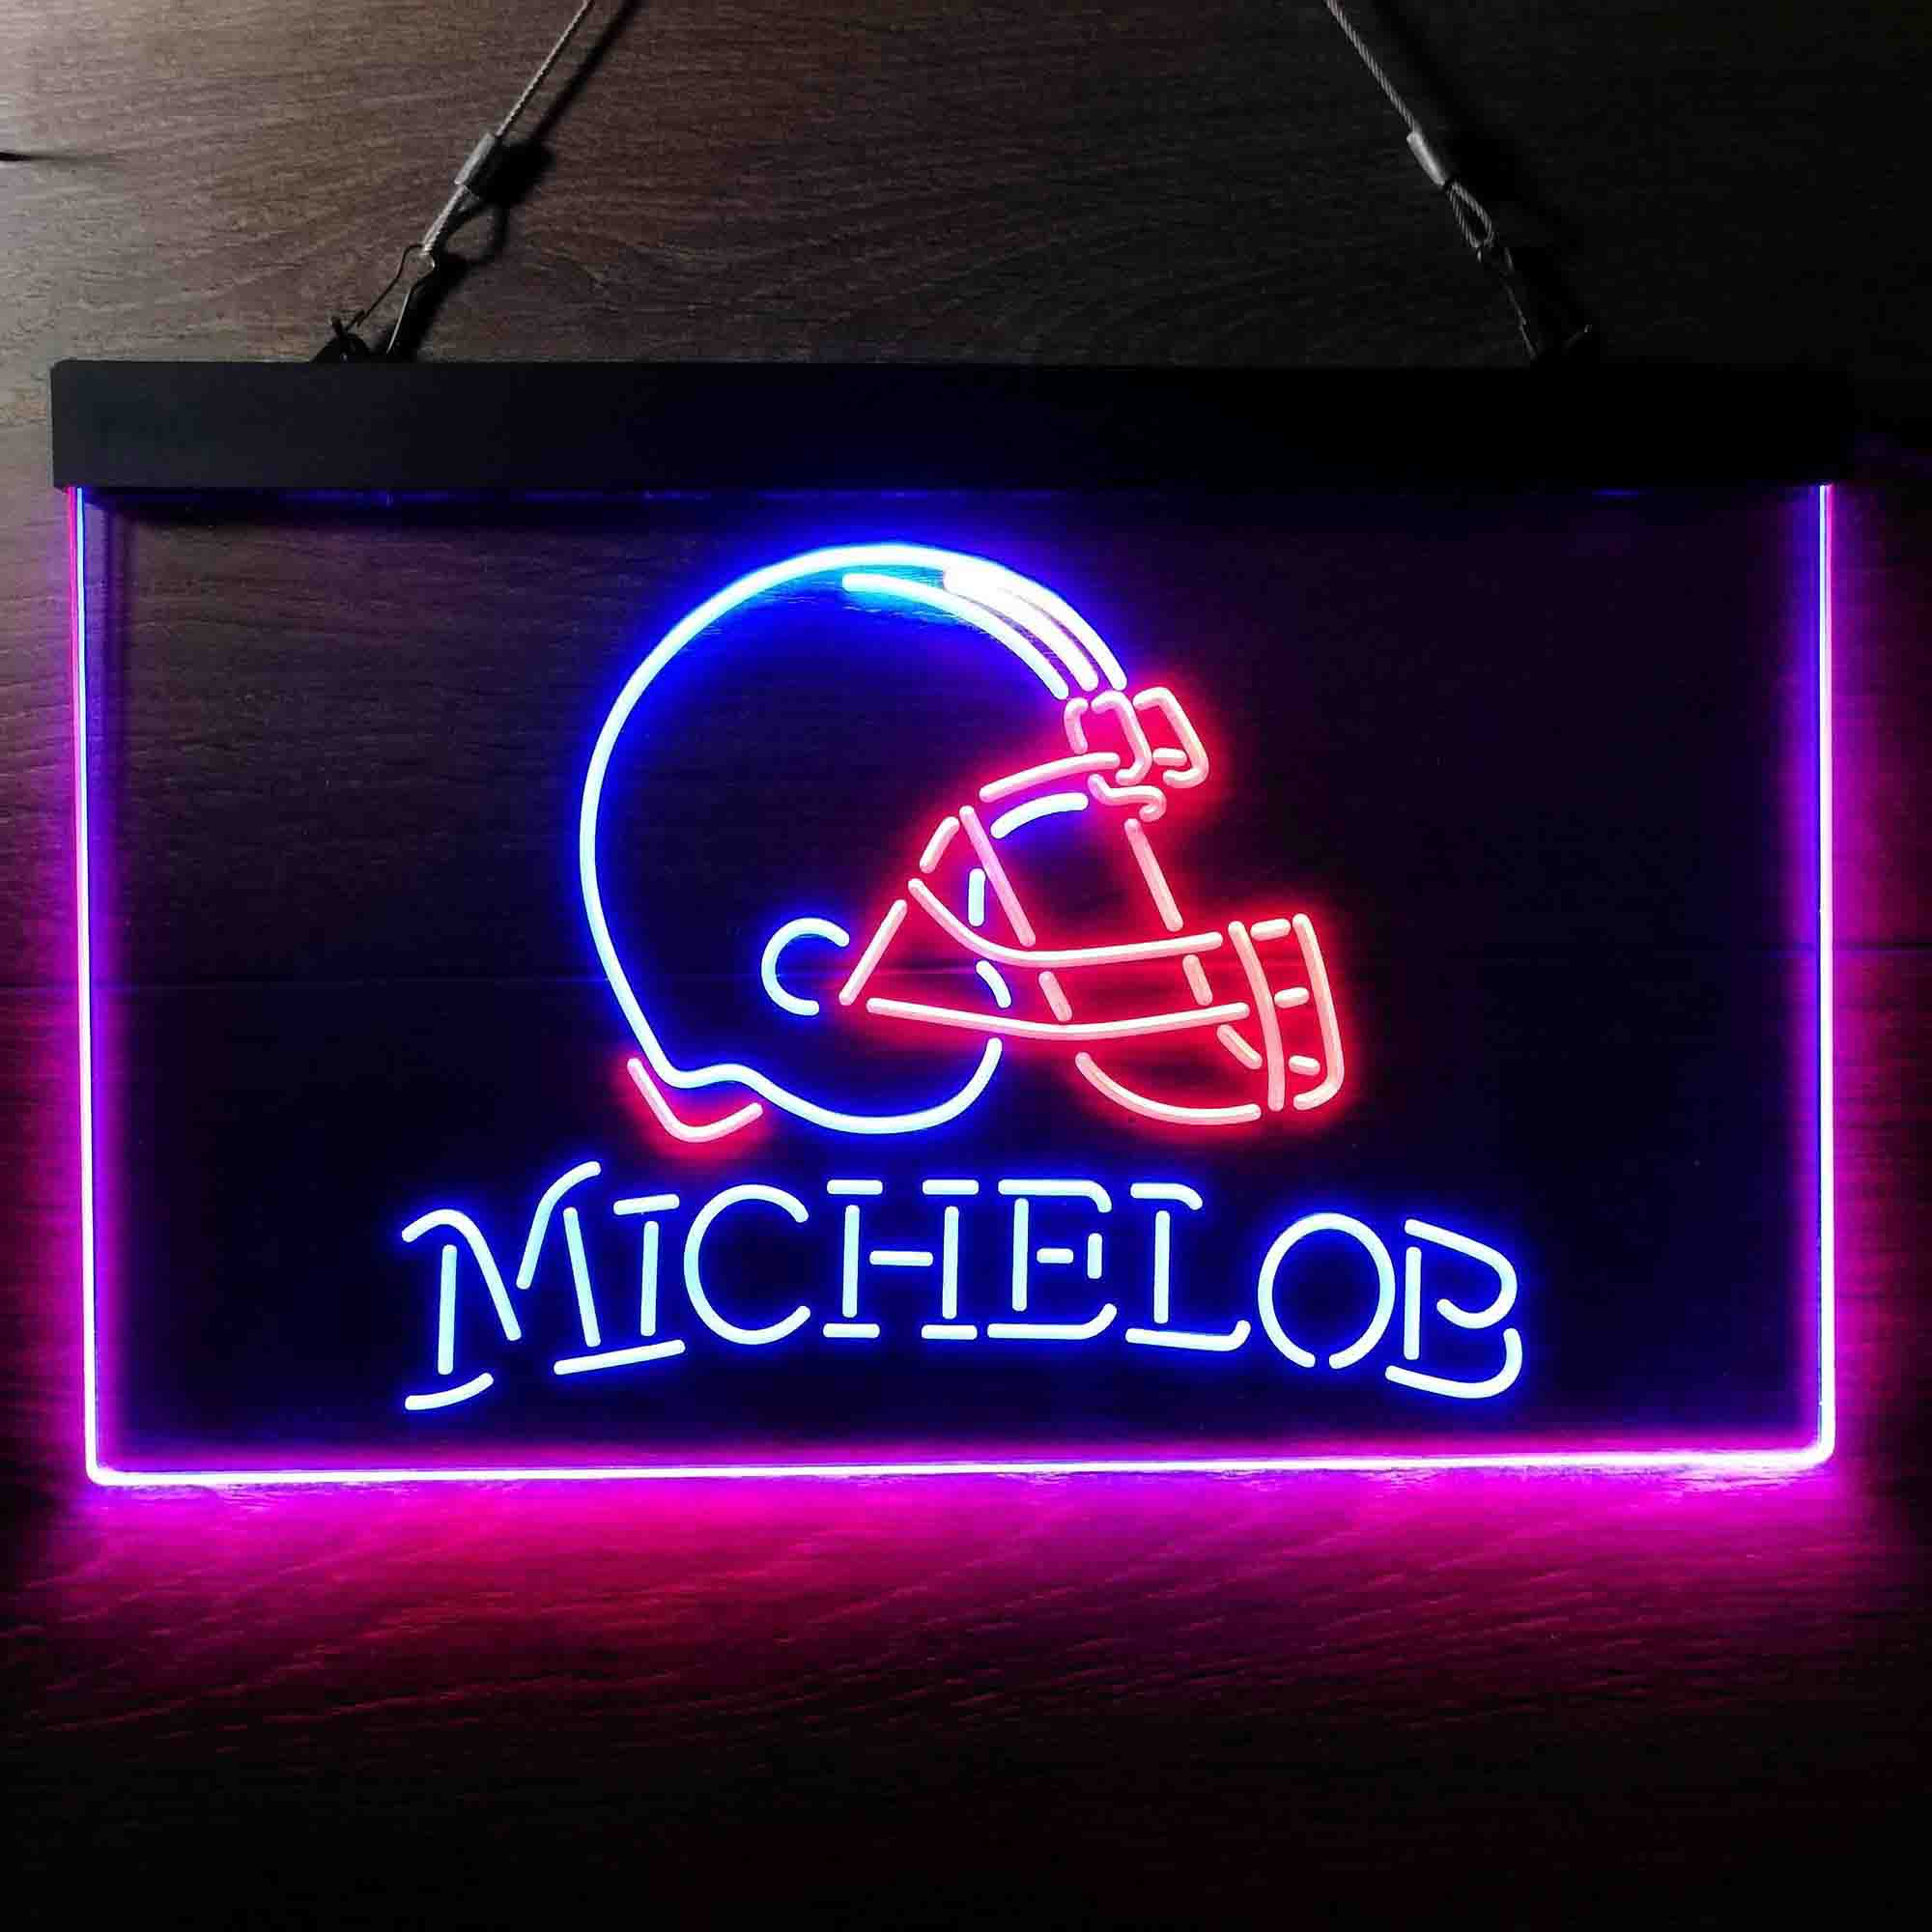 Michelob Bar Cleveland Browns Est. 1946 LED Neon Sign